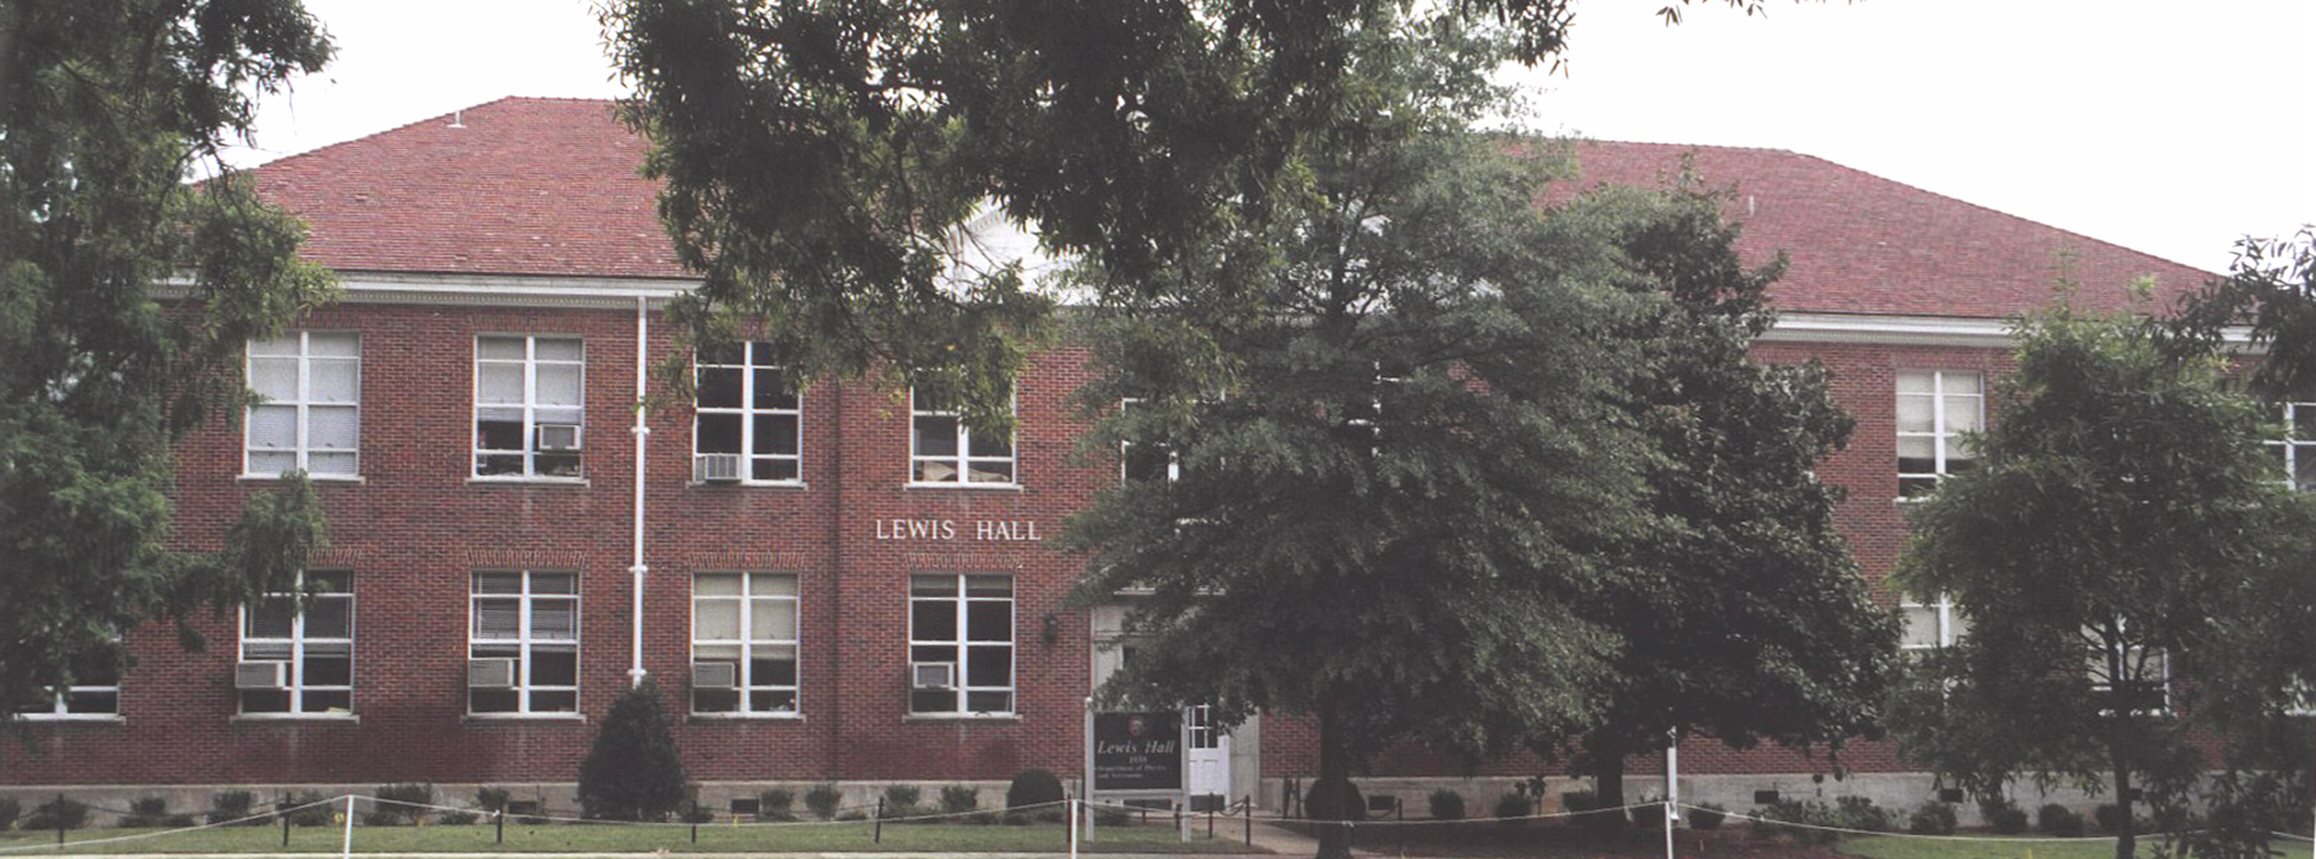 Lewis Hall, north side